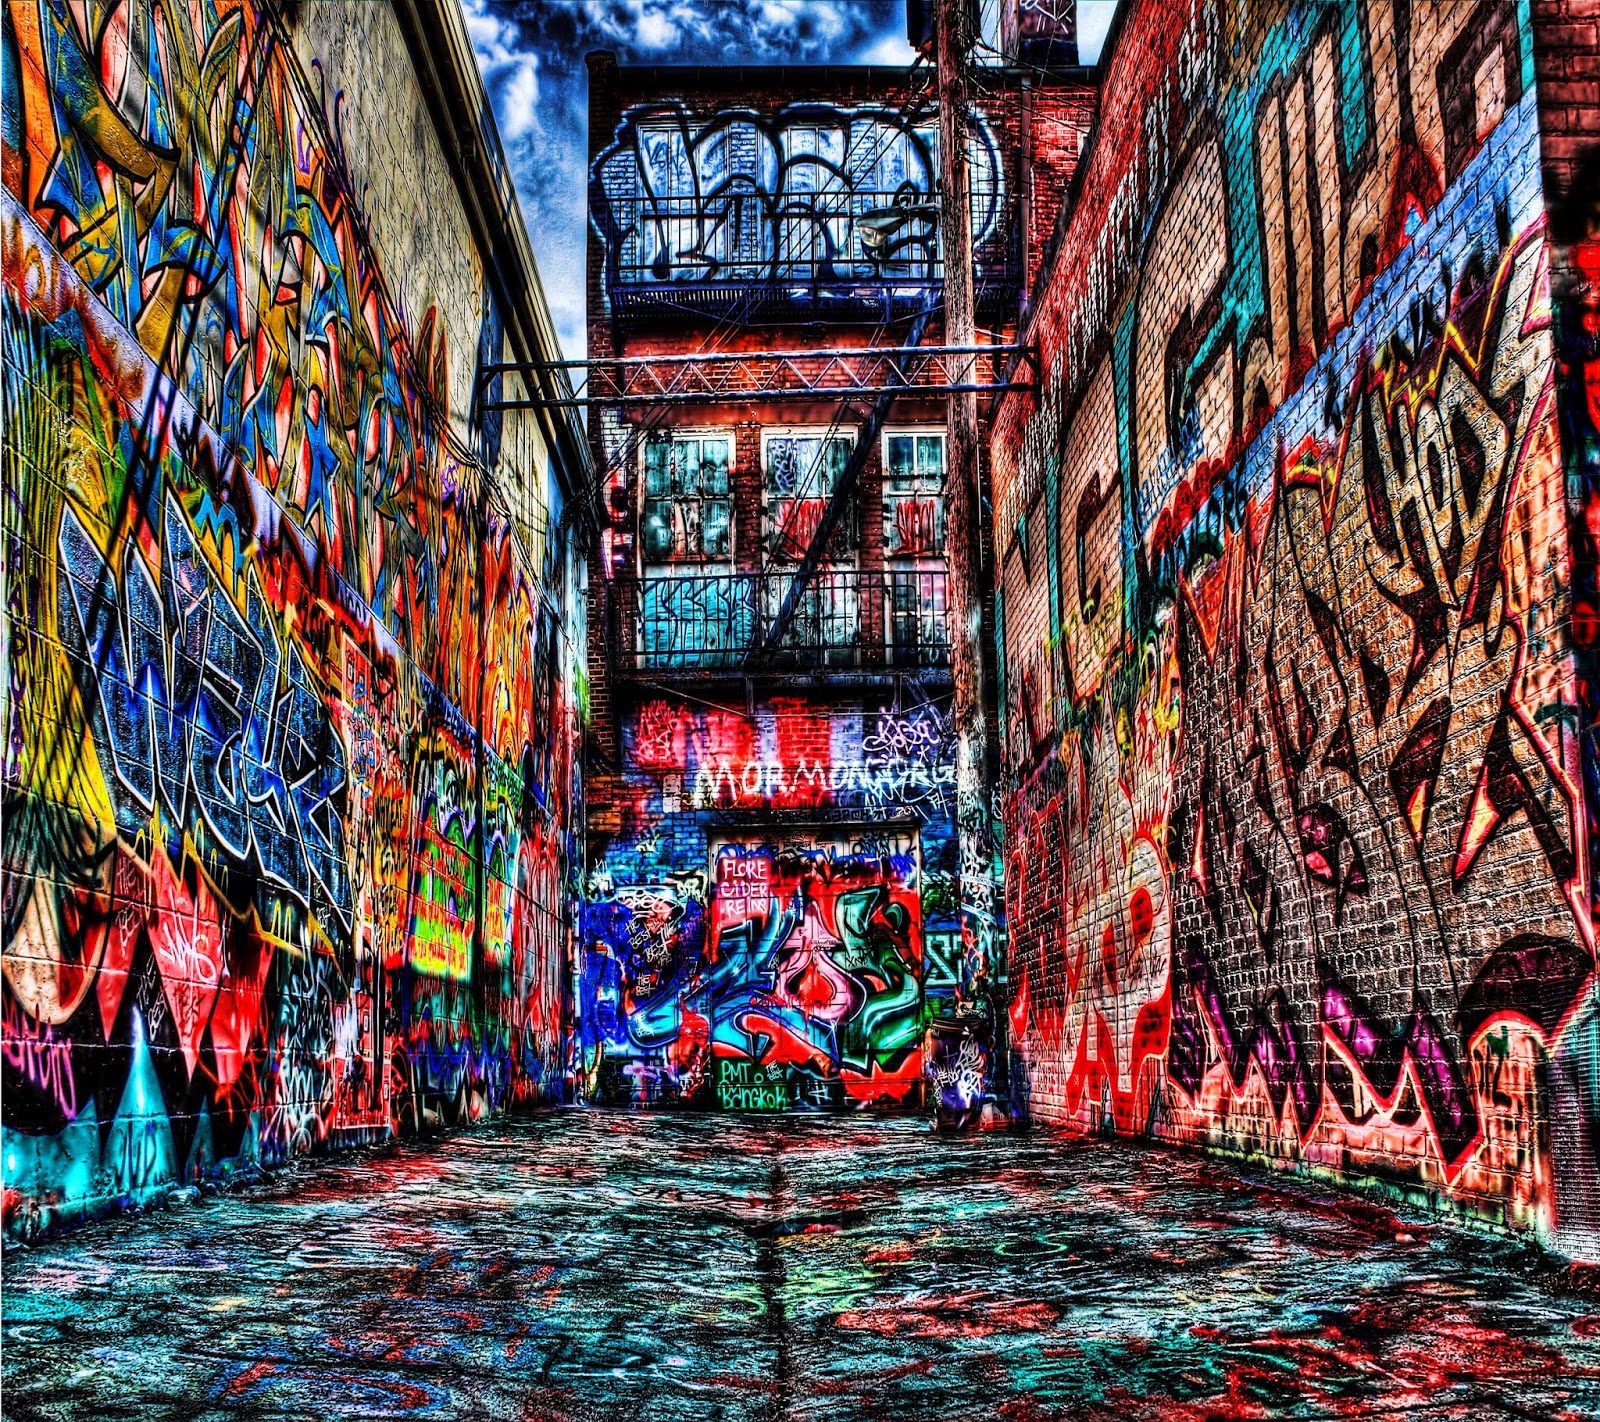 wallpaper hp android keren,art,urban area,graffiti,modern art,architecture